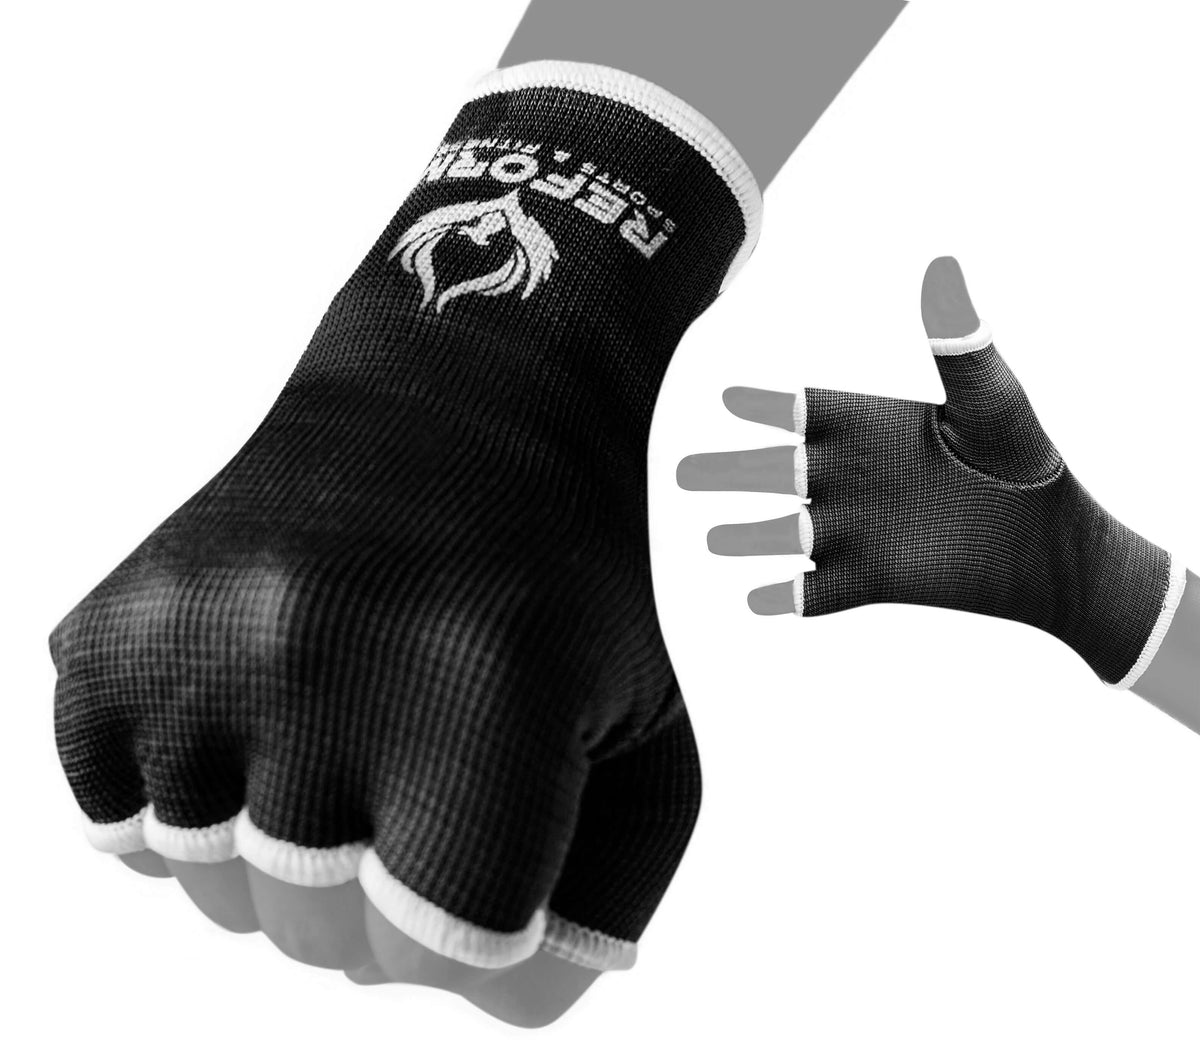 ISH Inner Gloves Hand bandages Boxing Wraps Fist MMA Punch Muay Thai Training 